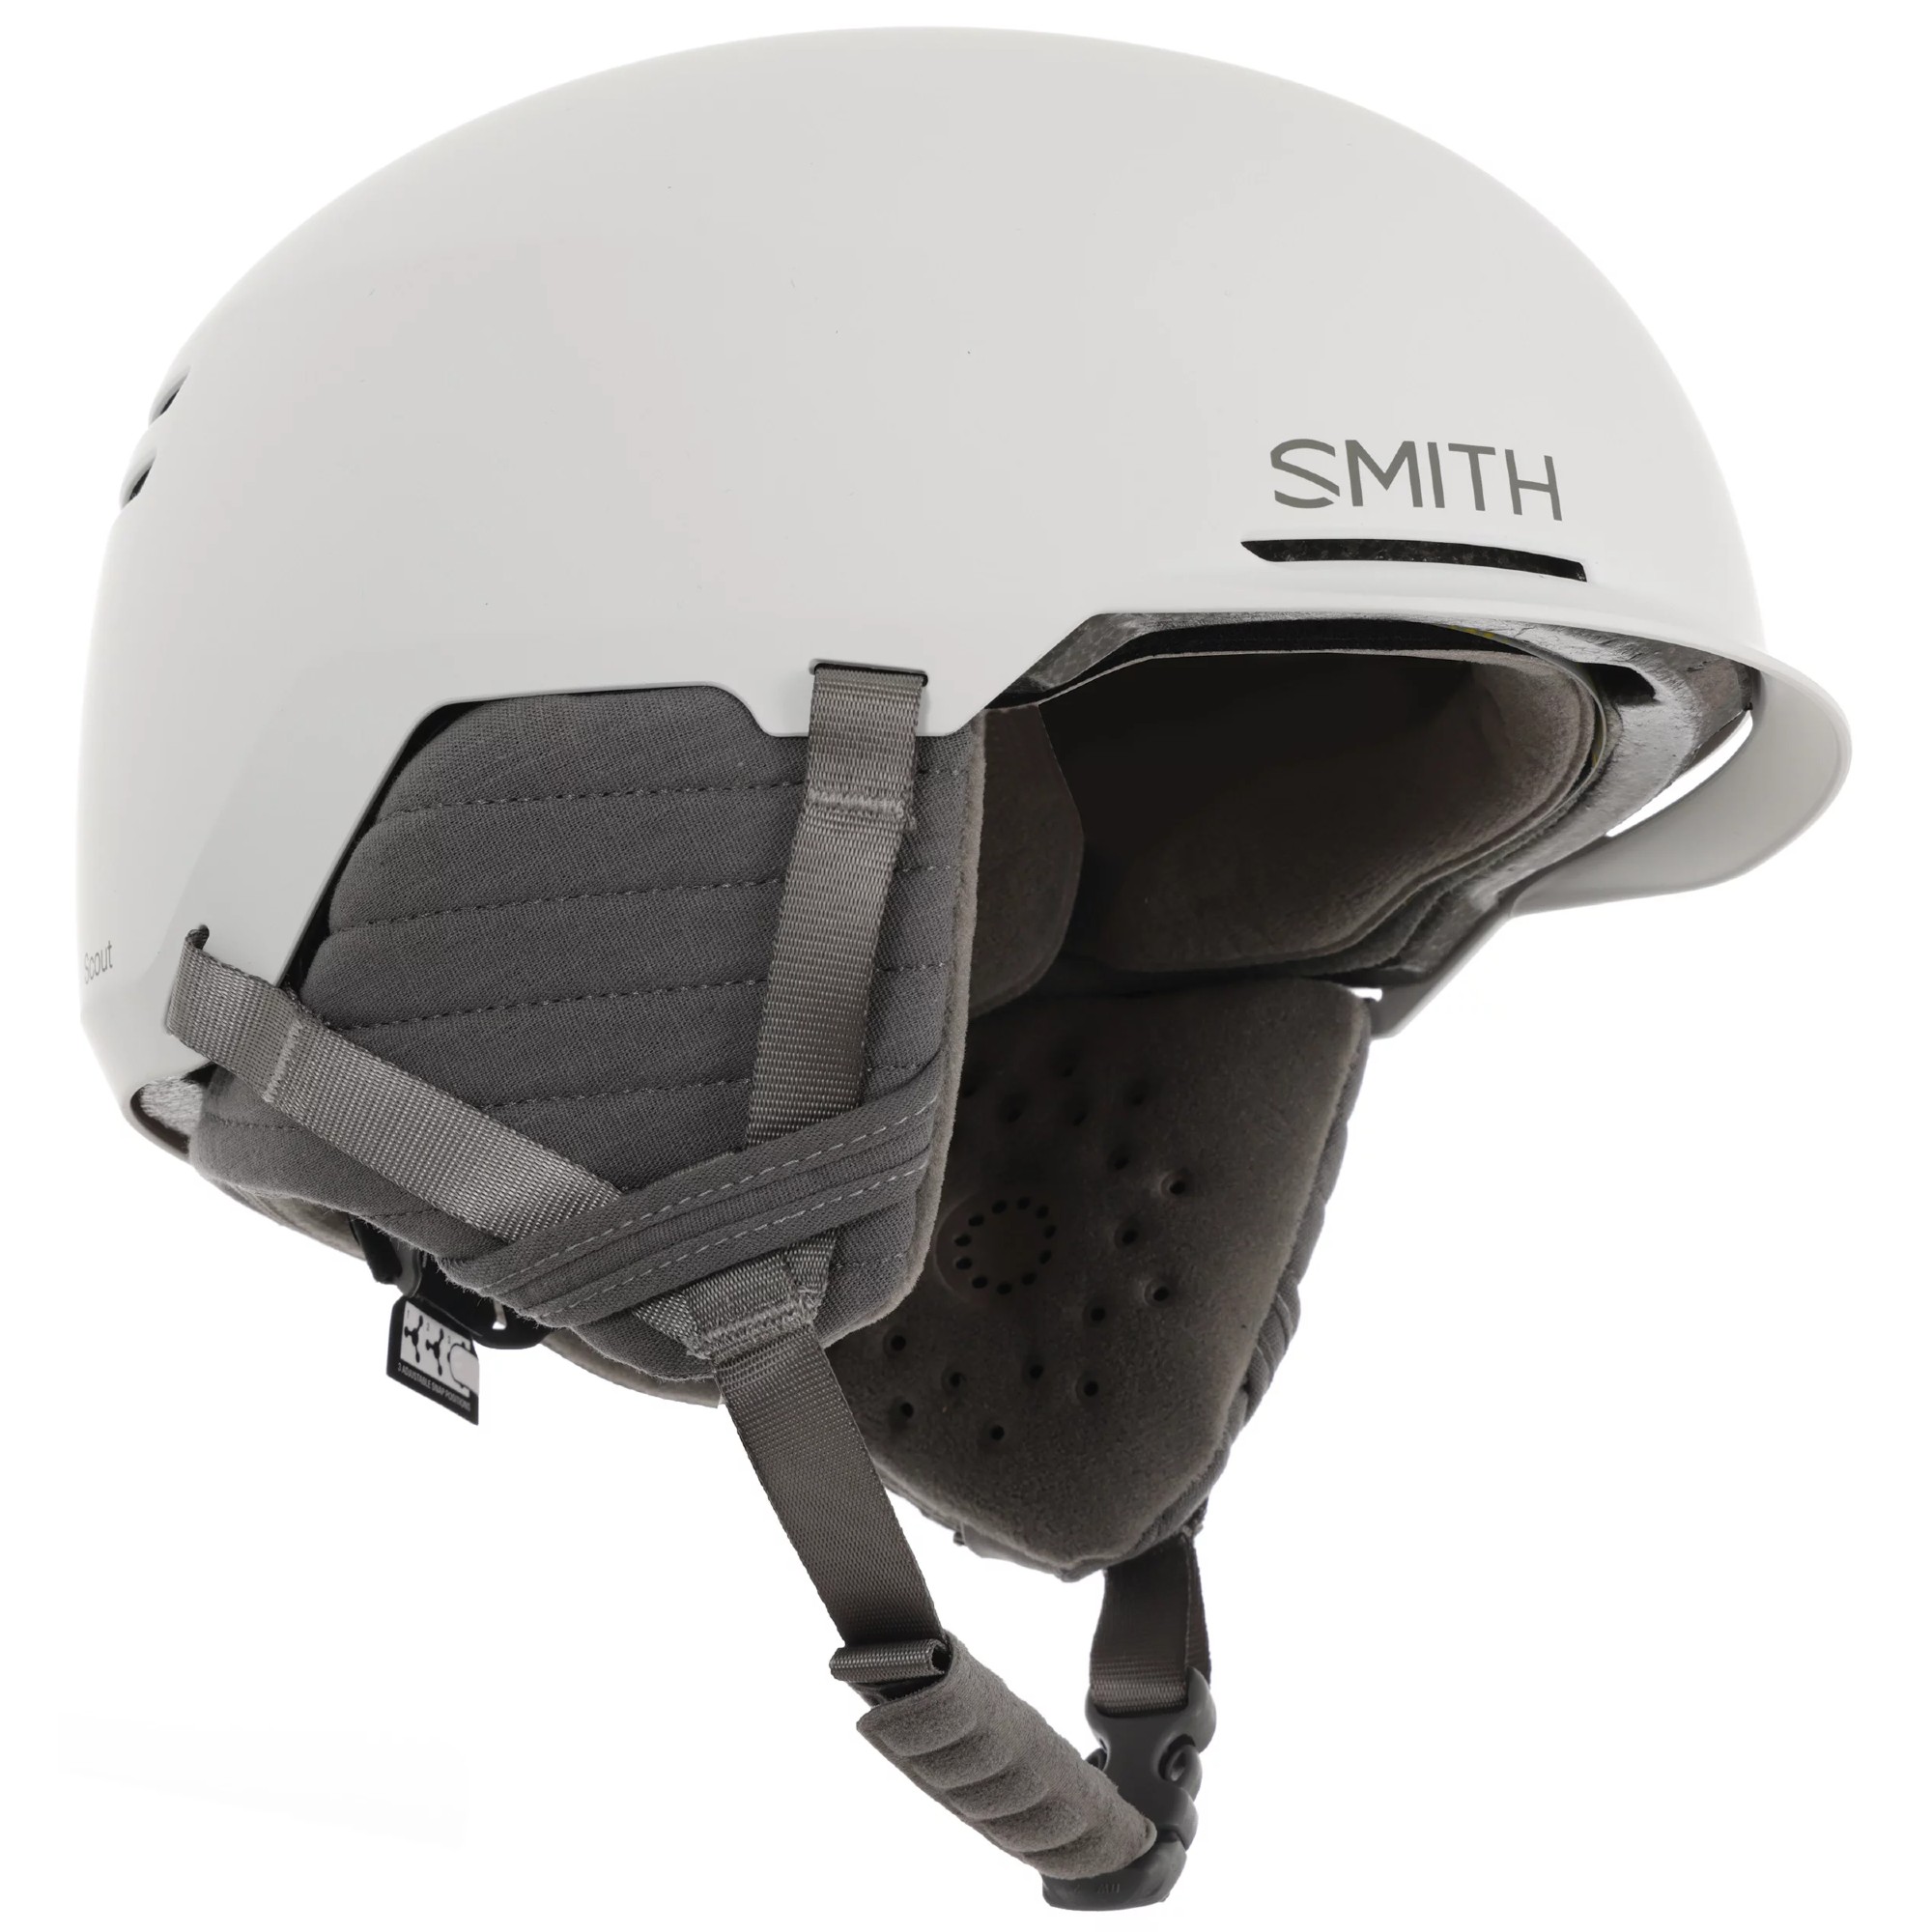 Smith Scout Snowboard/Ski Helmet